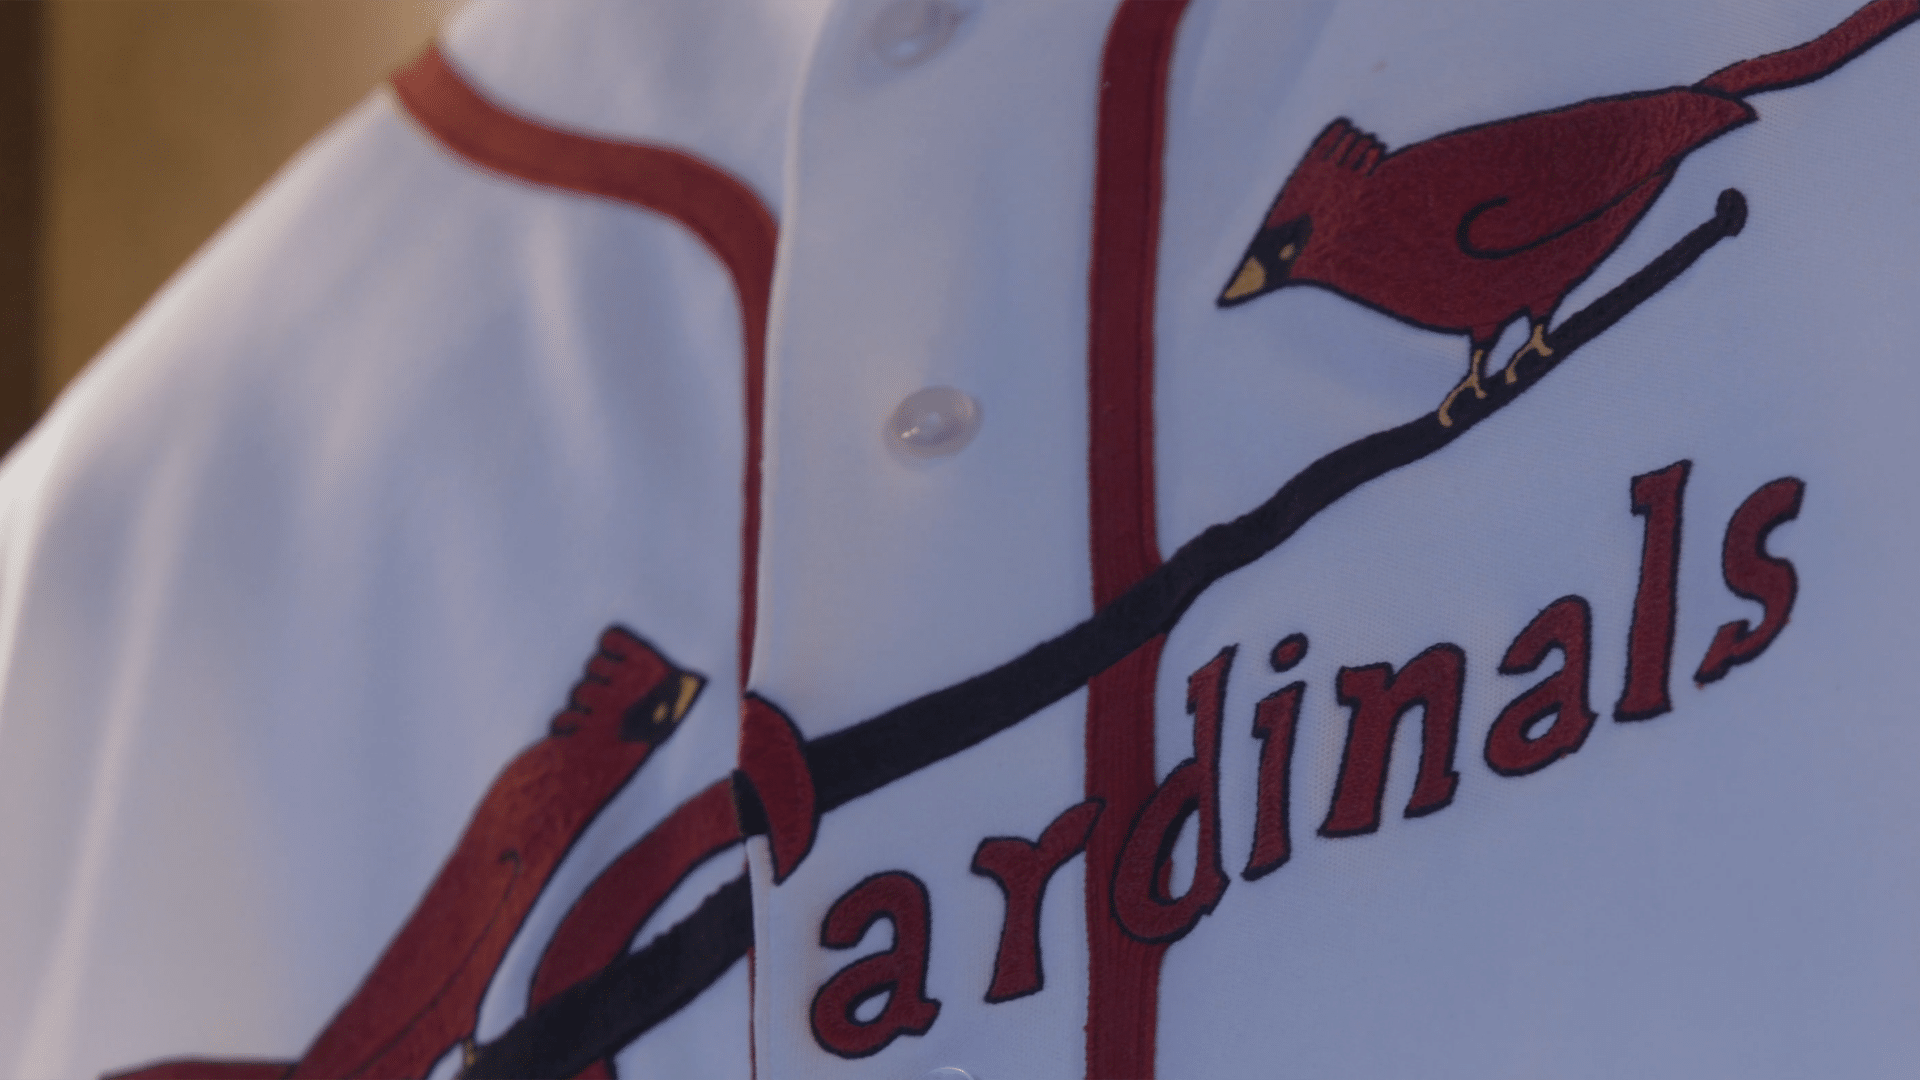 Vintage Cardinals baseball jersey